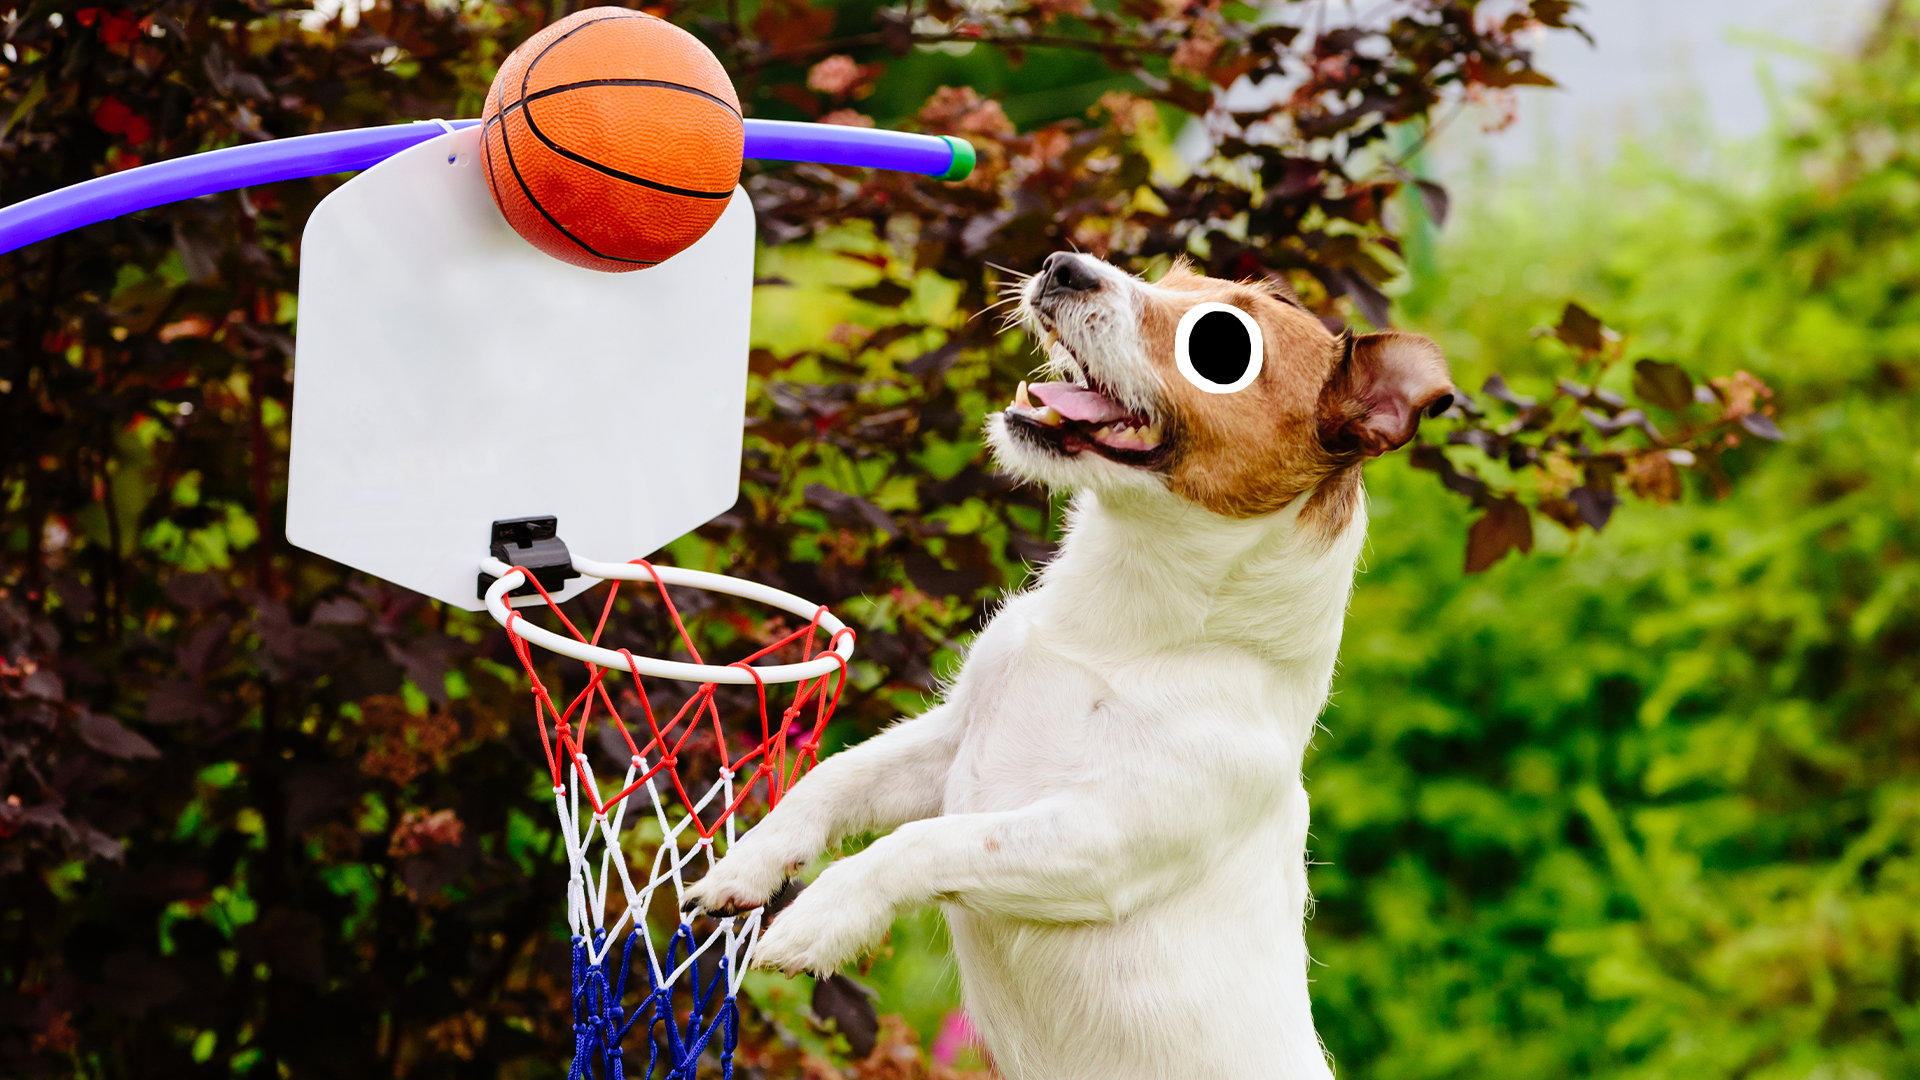 Dog playing basketball in garden